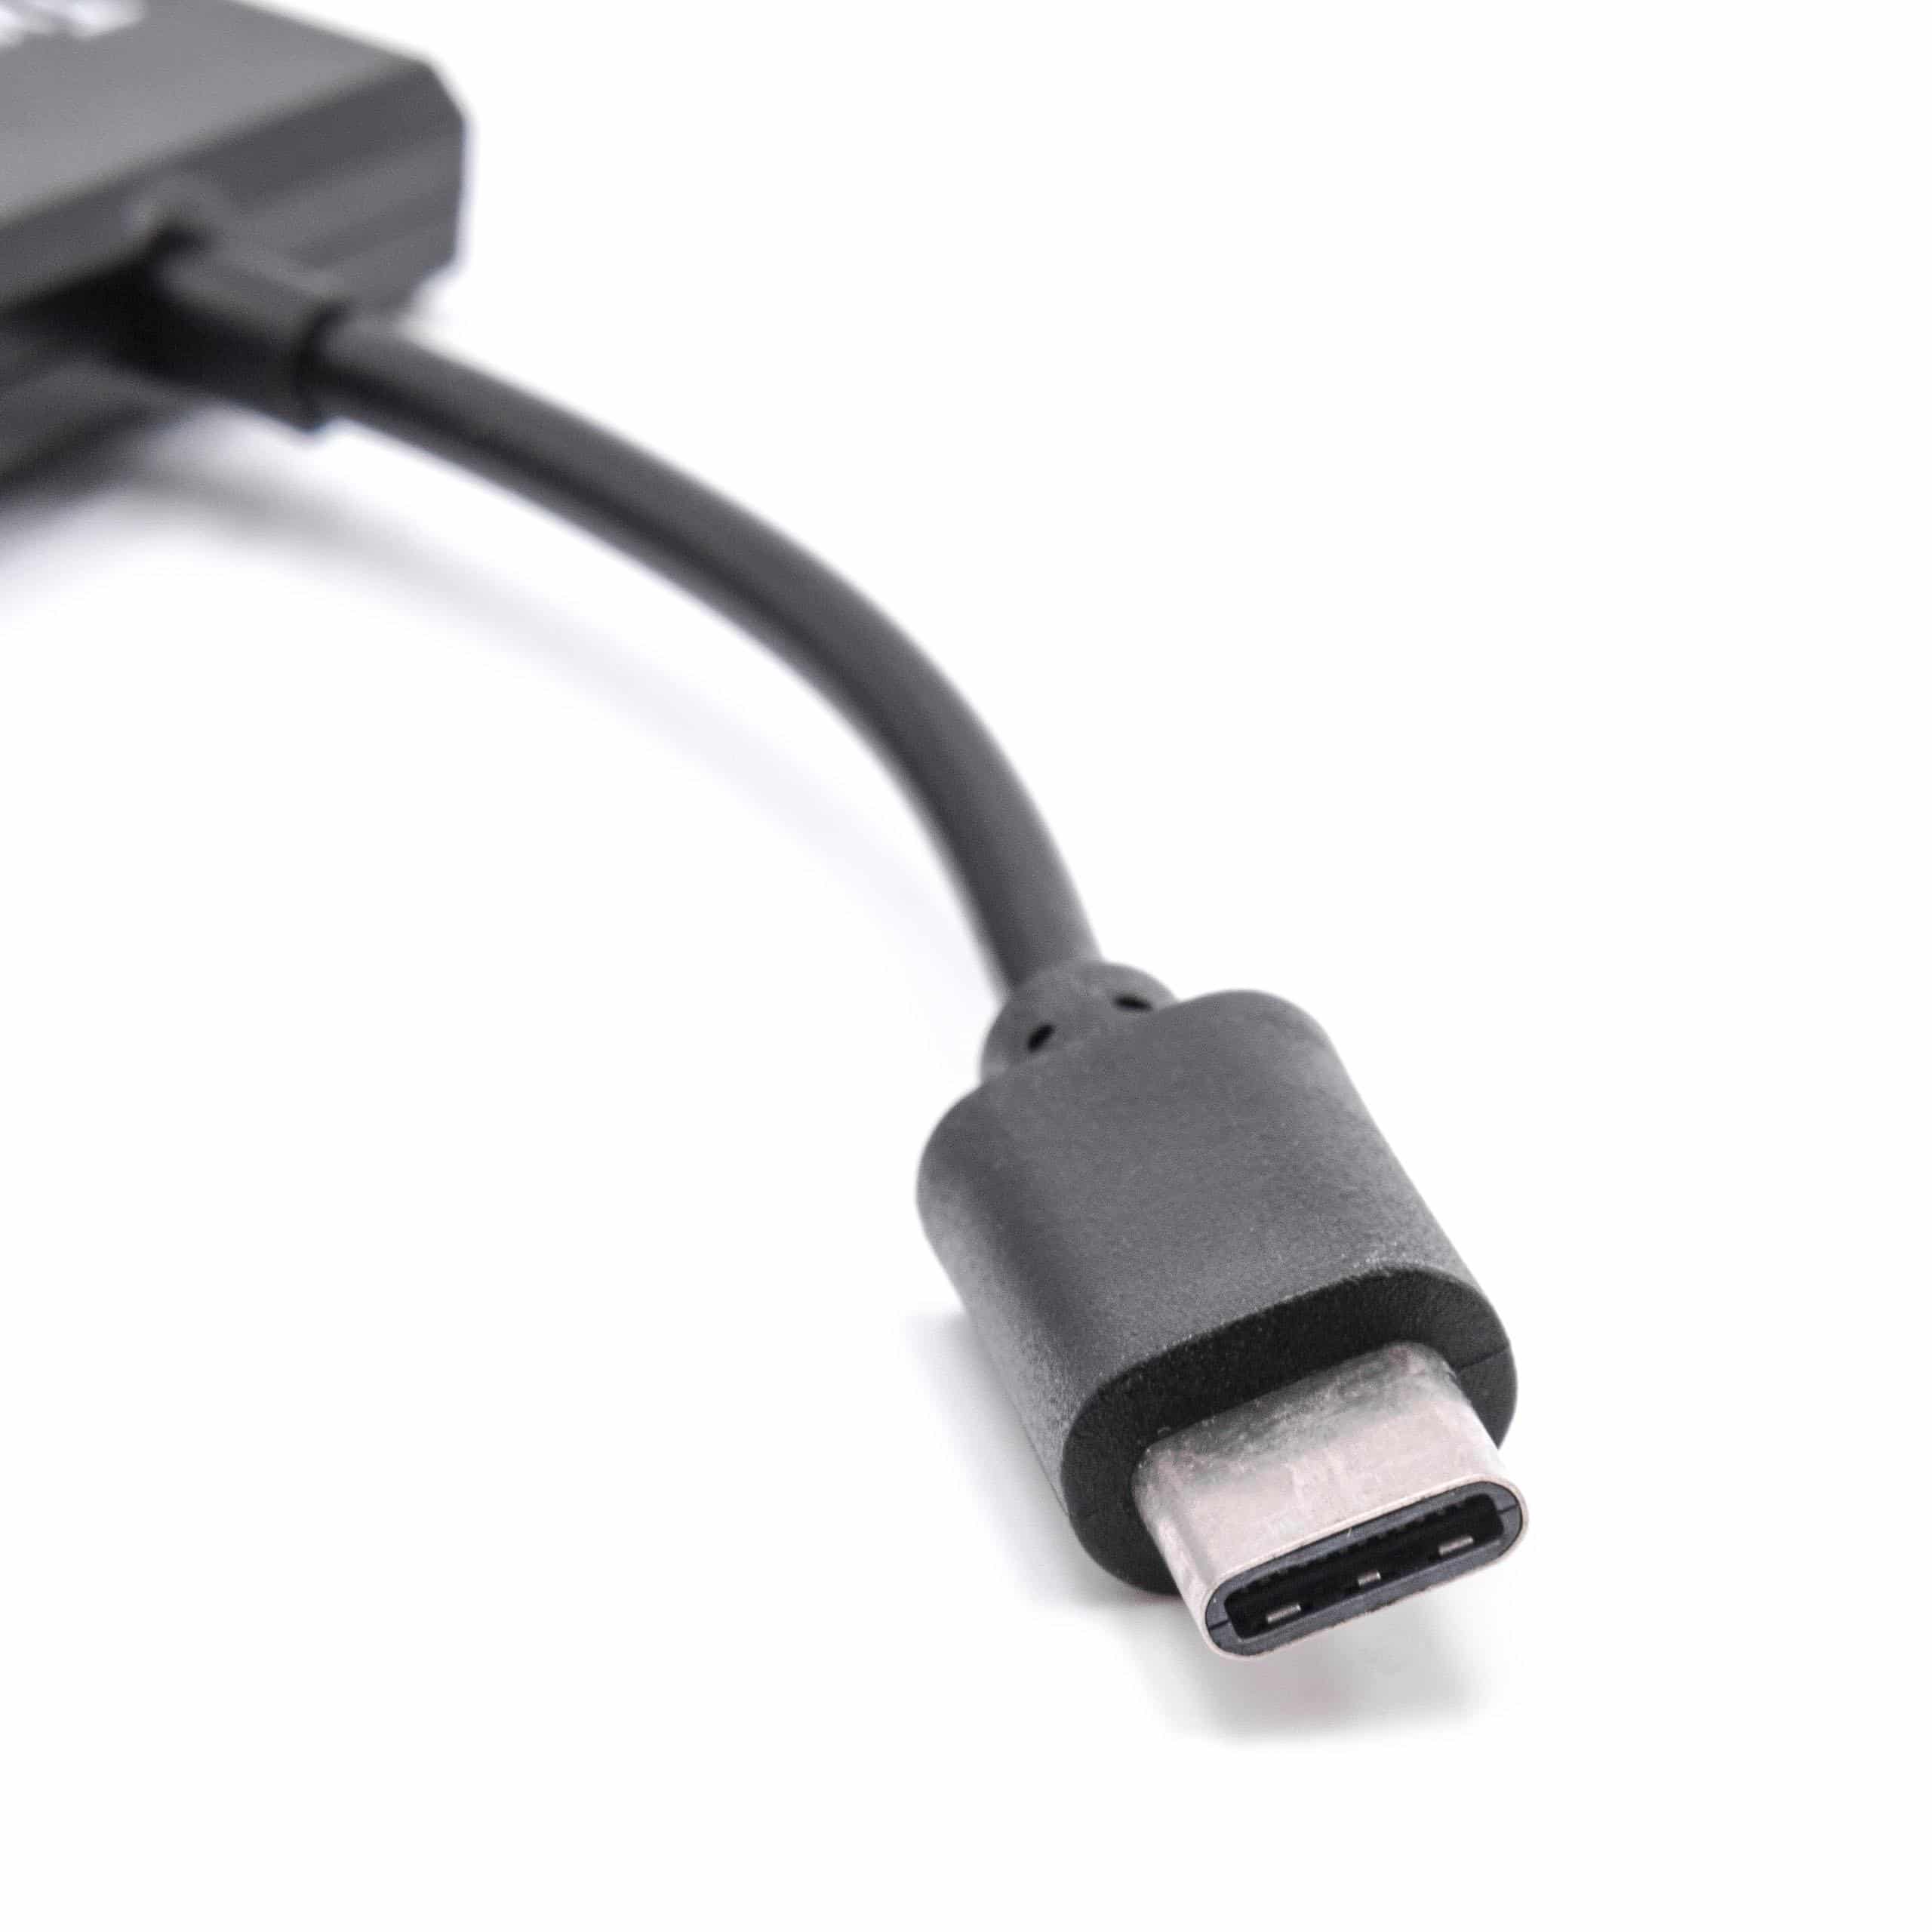 Adattatore OTG daUSB tipo C (maschio) a micro USB (femmina), 2x USB (femmina) per smartphone, tablet, laptop